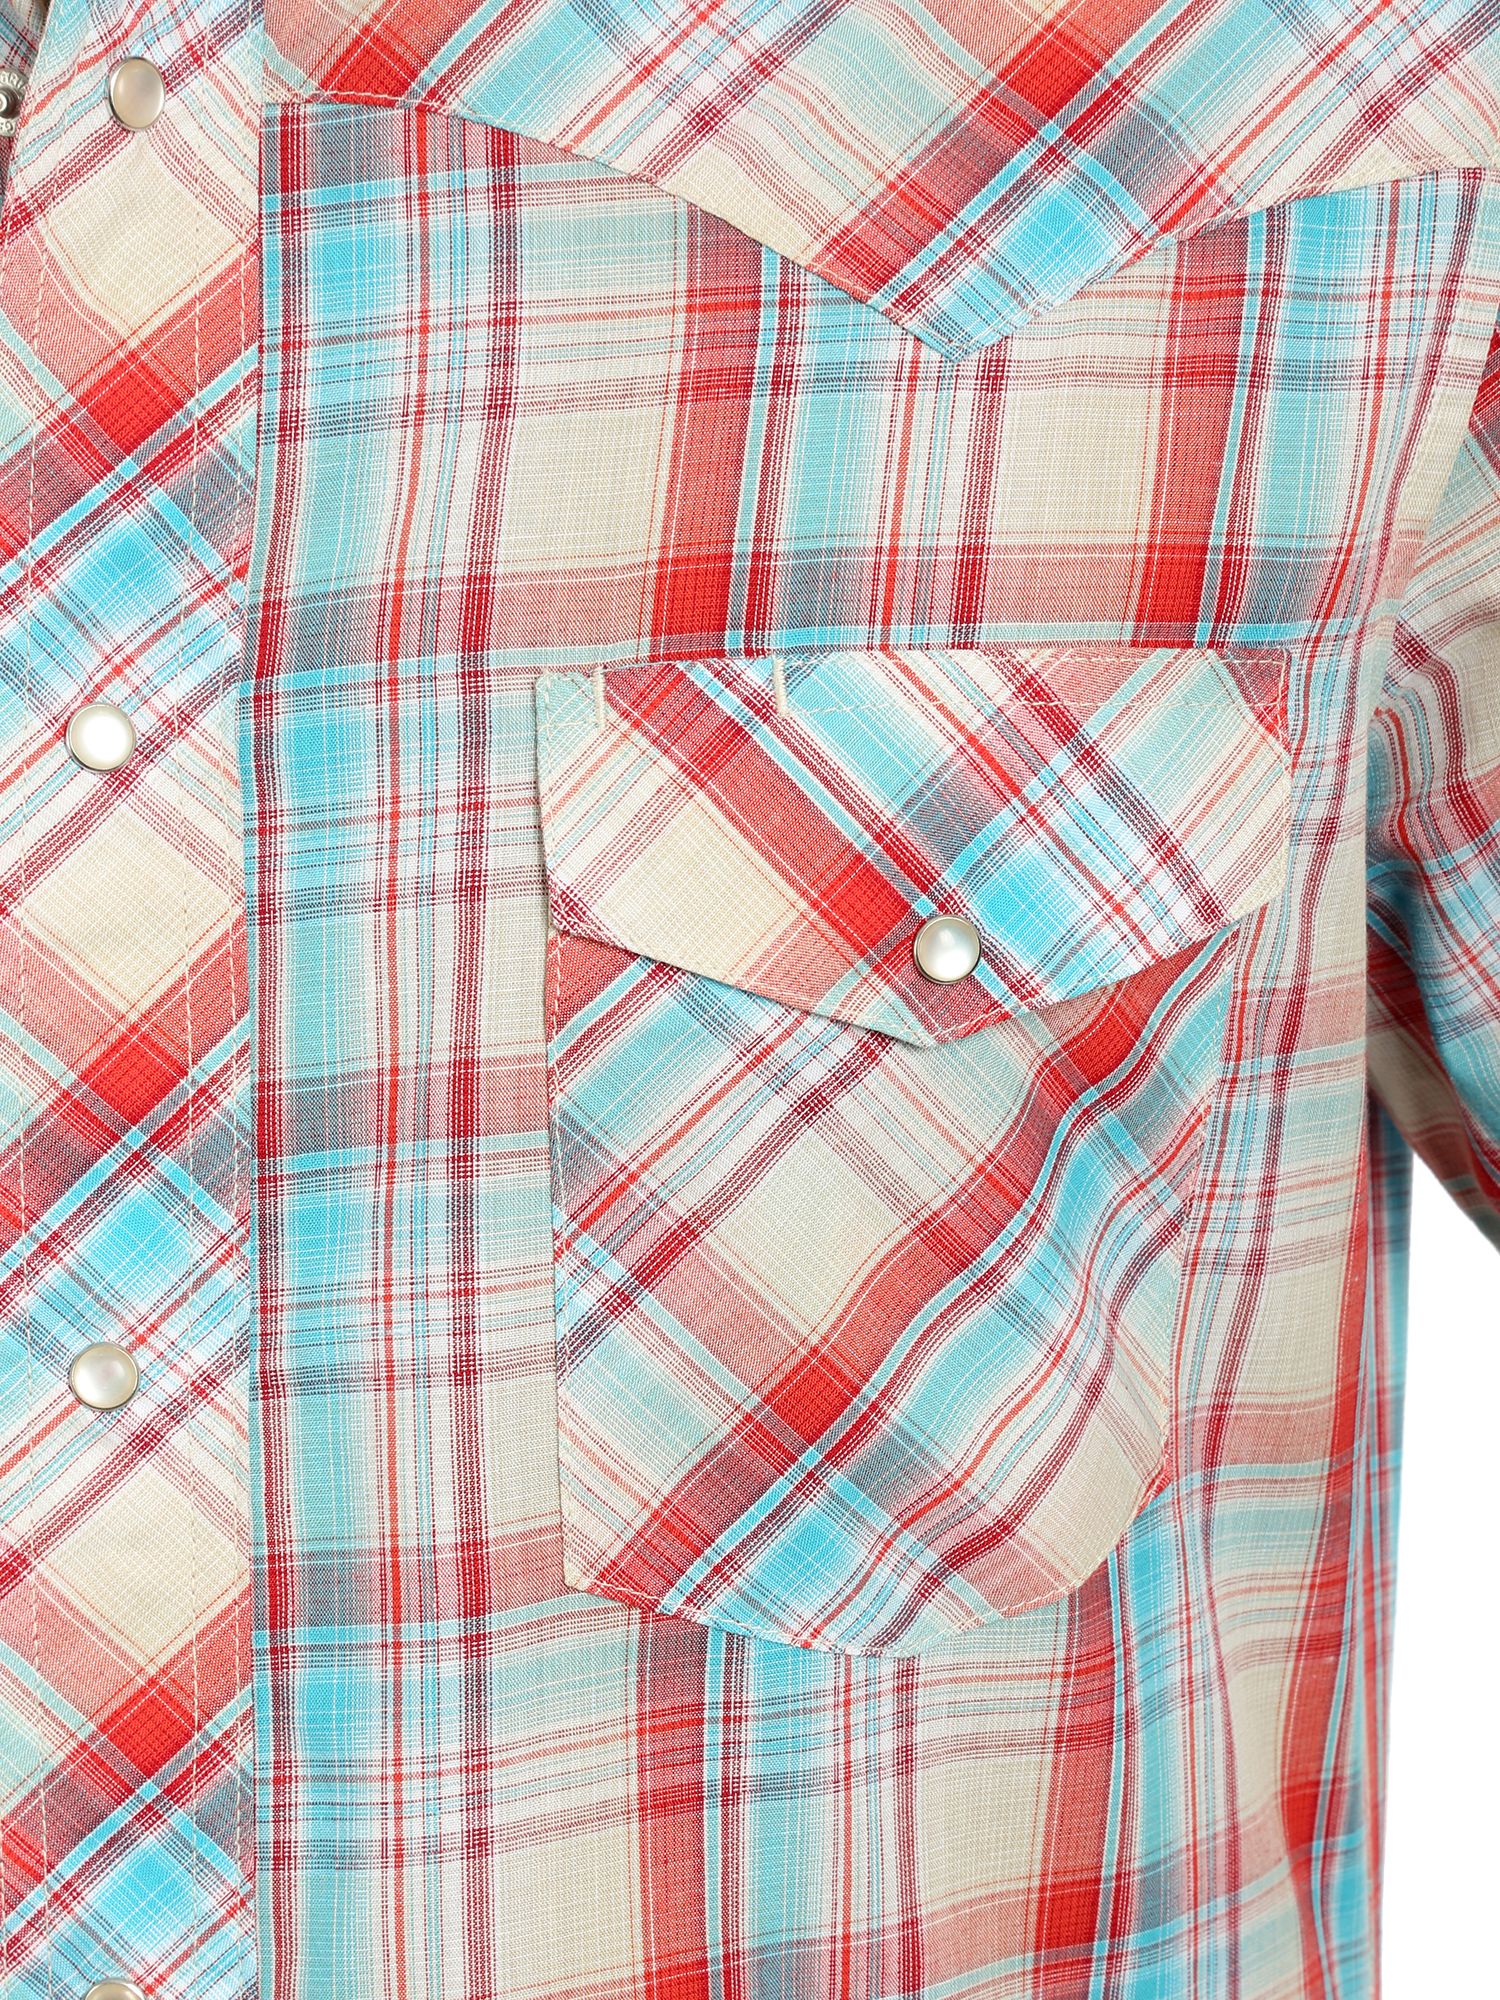 Wrangler Men's and Big Men's Short Sleeve Plaid Western Shirt - image 3 of 3